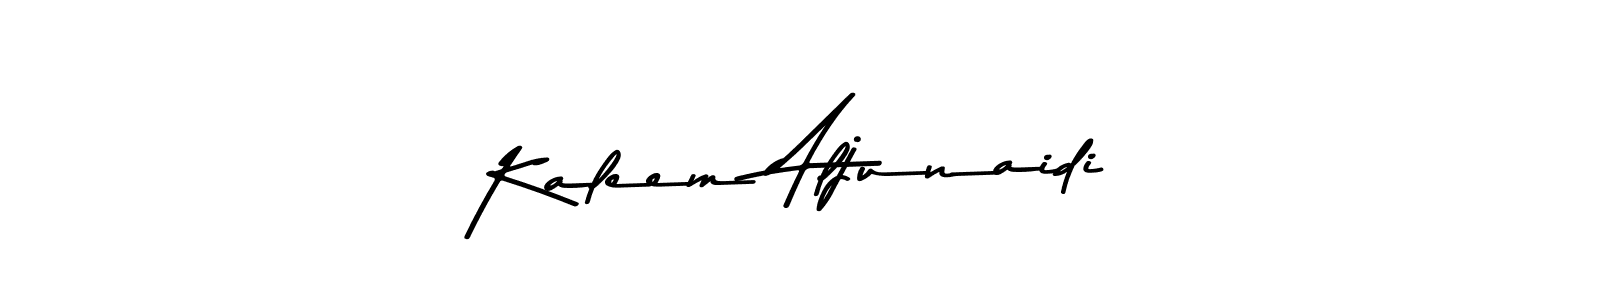 How to Draw Kaleem Aljunaidi signature style? Asem Kandis PERSONAL USE is a latest design signature styles for name Kaleem Aljunaidi. Kaleem Aljunaidi signature style 9 images and pictures png